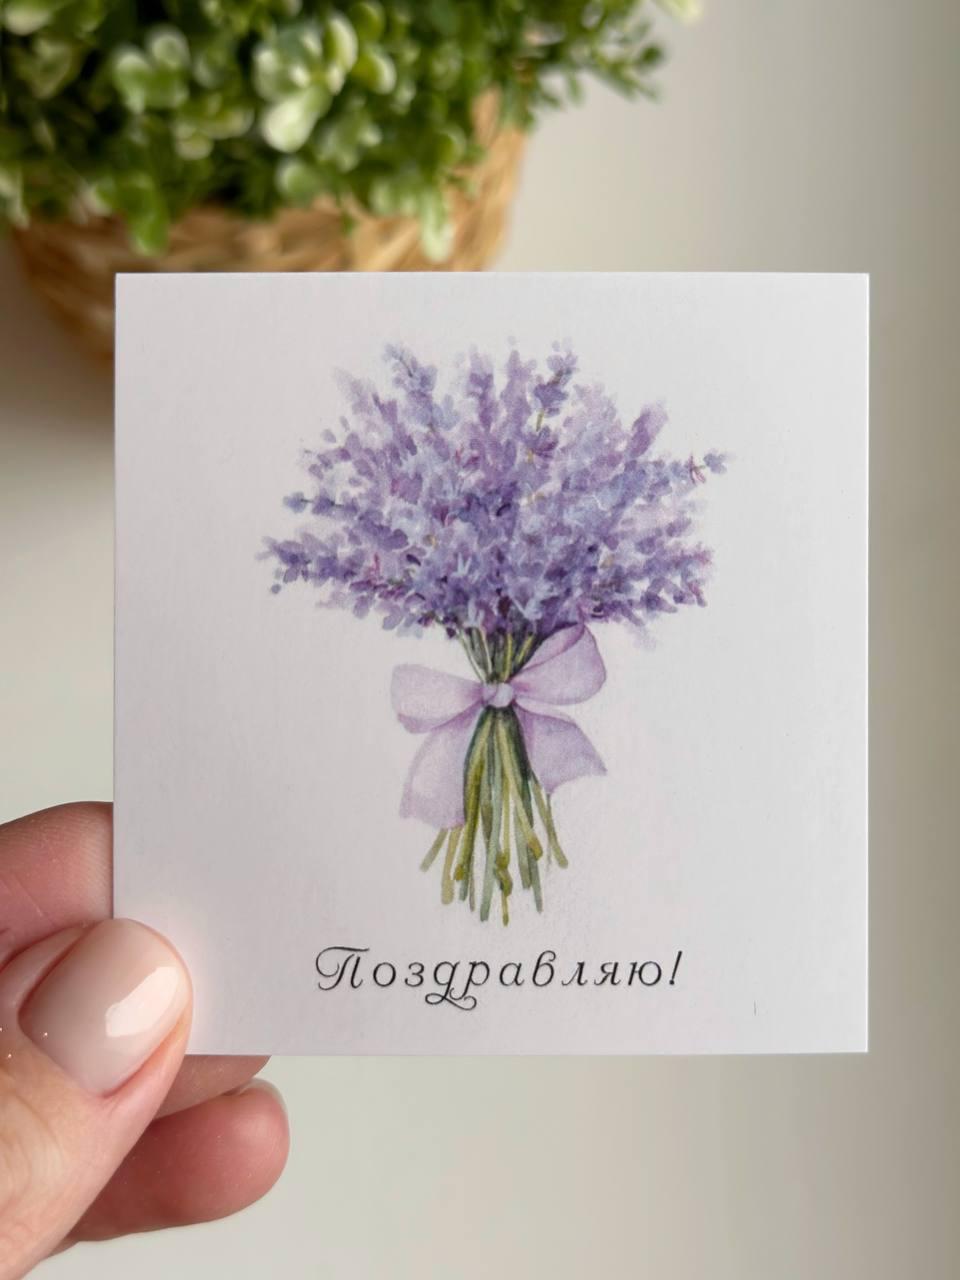 Insert "Congratulations! Bouquet of lavender"